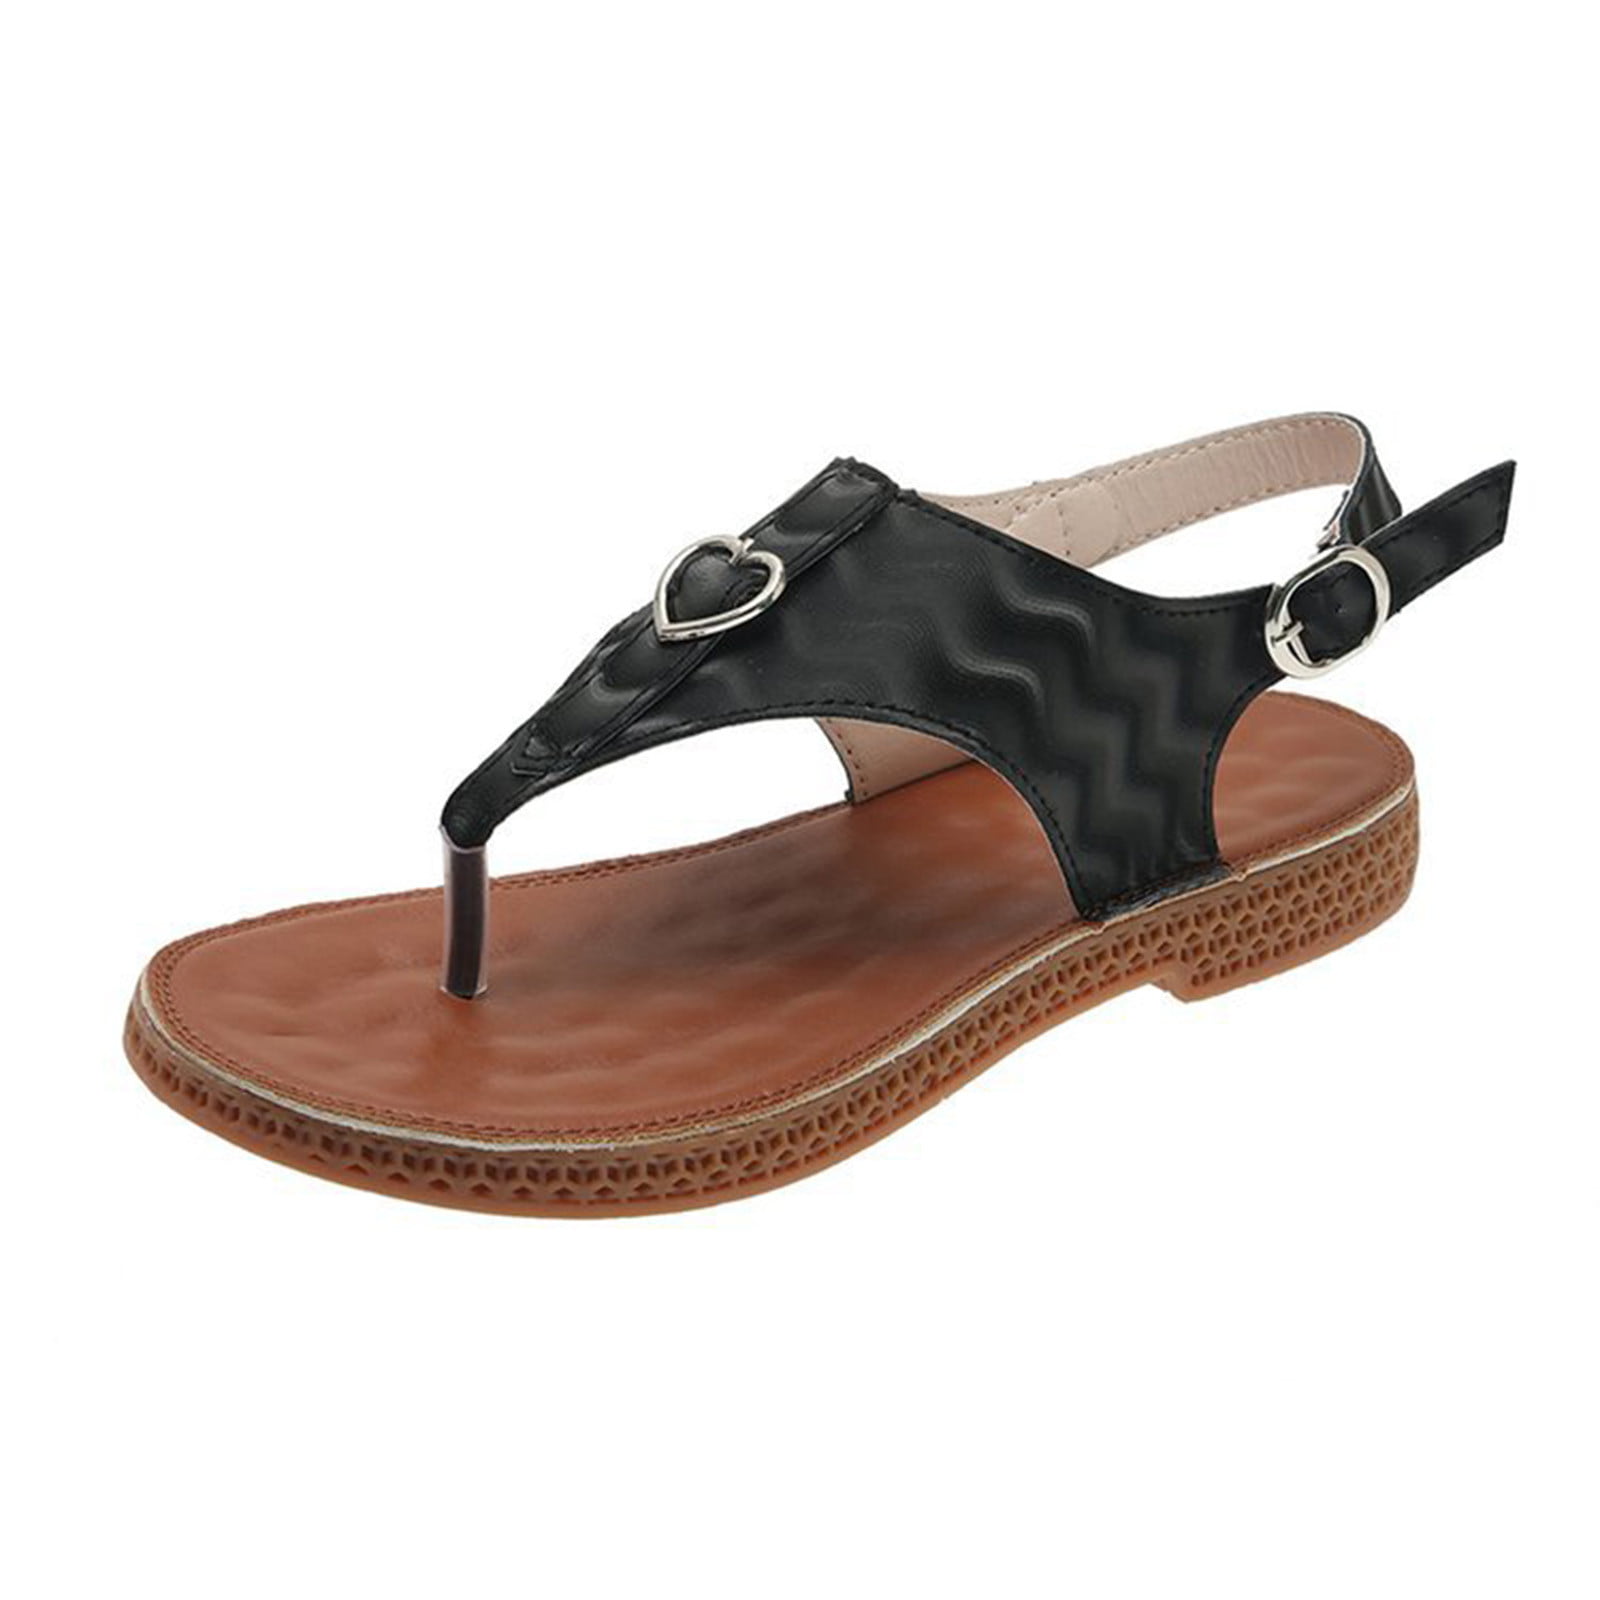 Island Slipper Leather Thong Wedge Black Womens Shoes Flats and flat shoes Flat sandals 